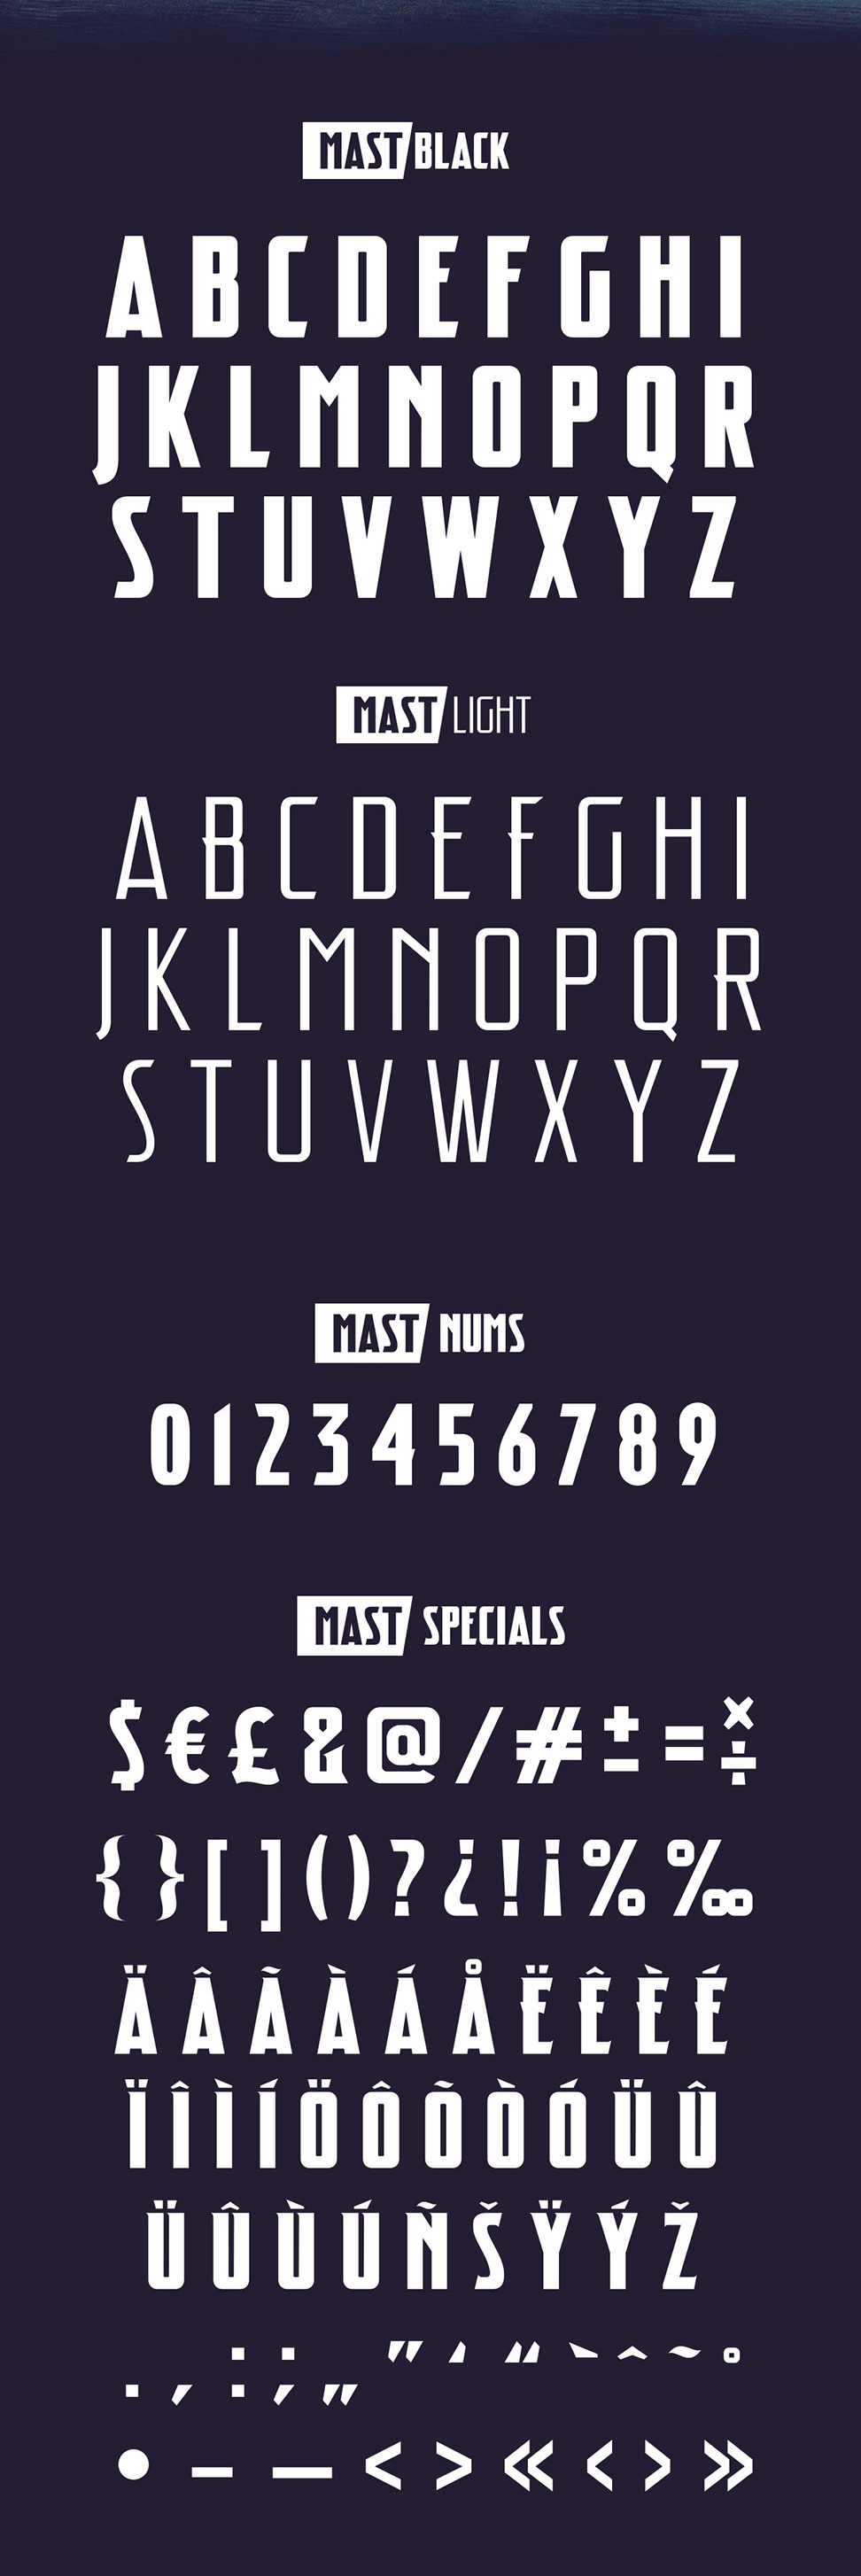 Mast Free Font Letters